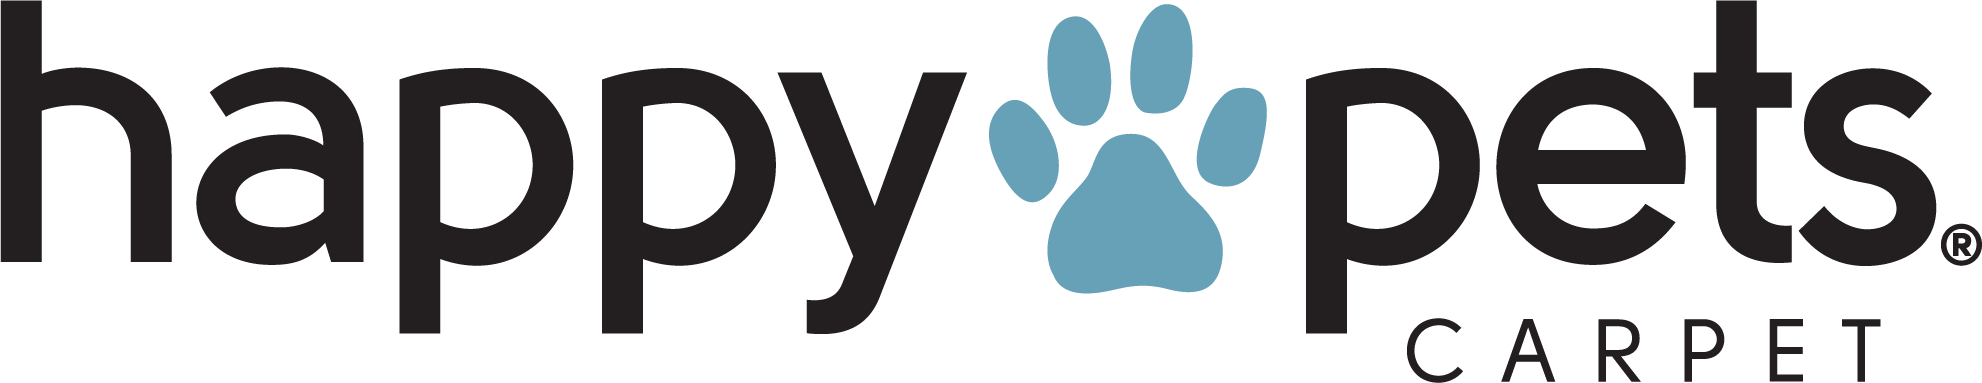 Pet Performance Happy Pets Logo | York Carpetland USA 